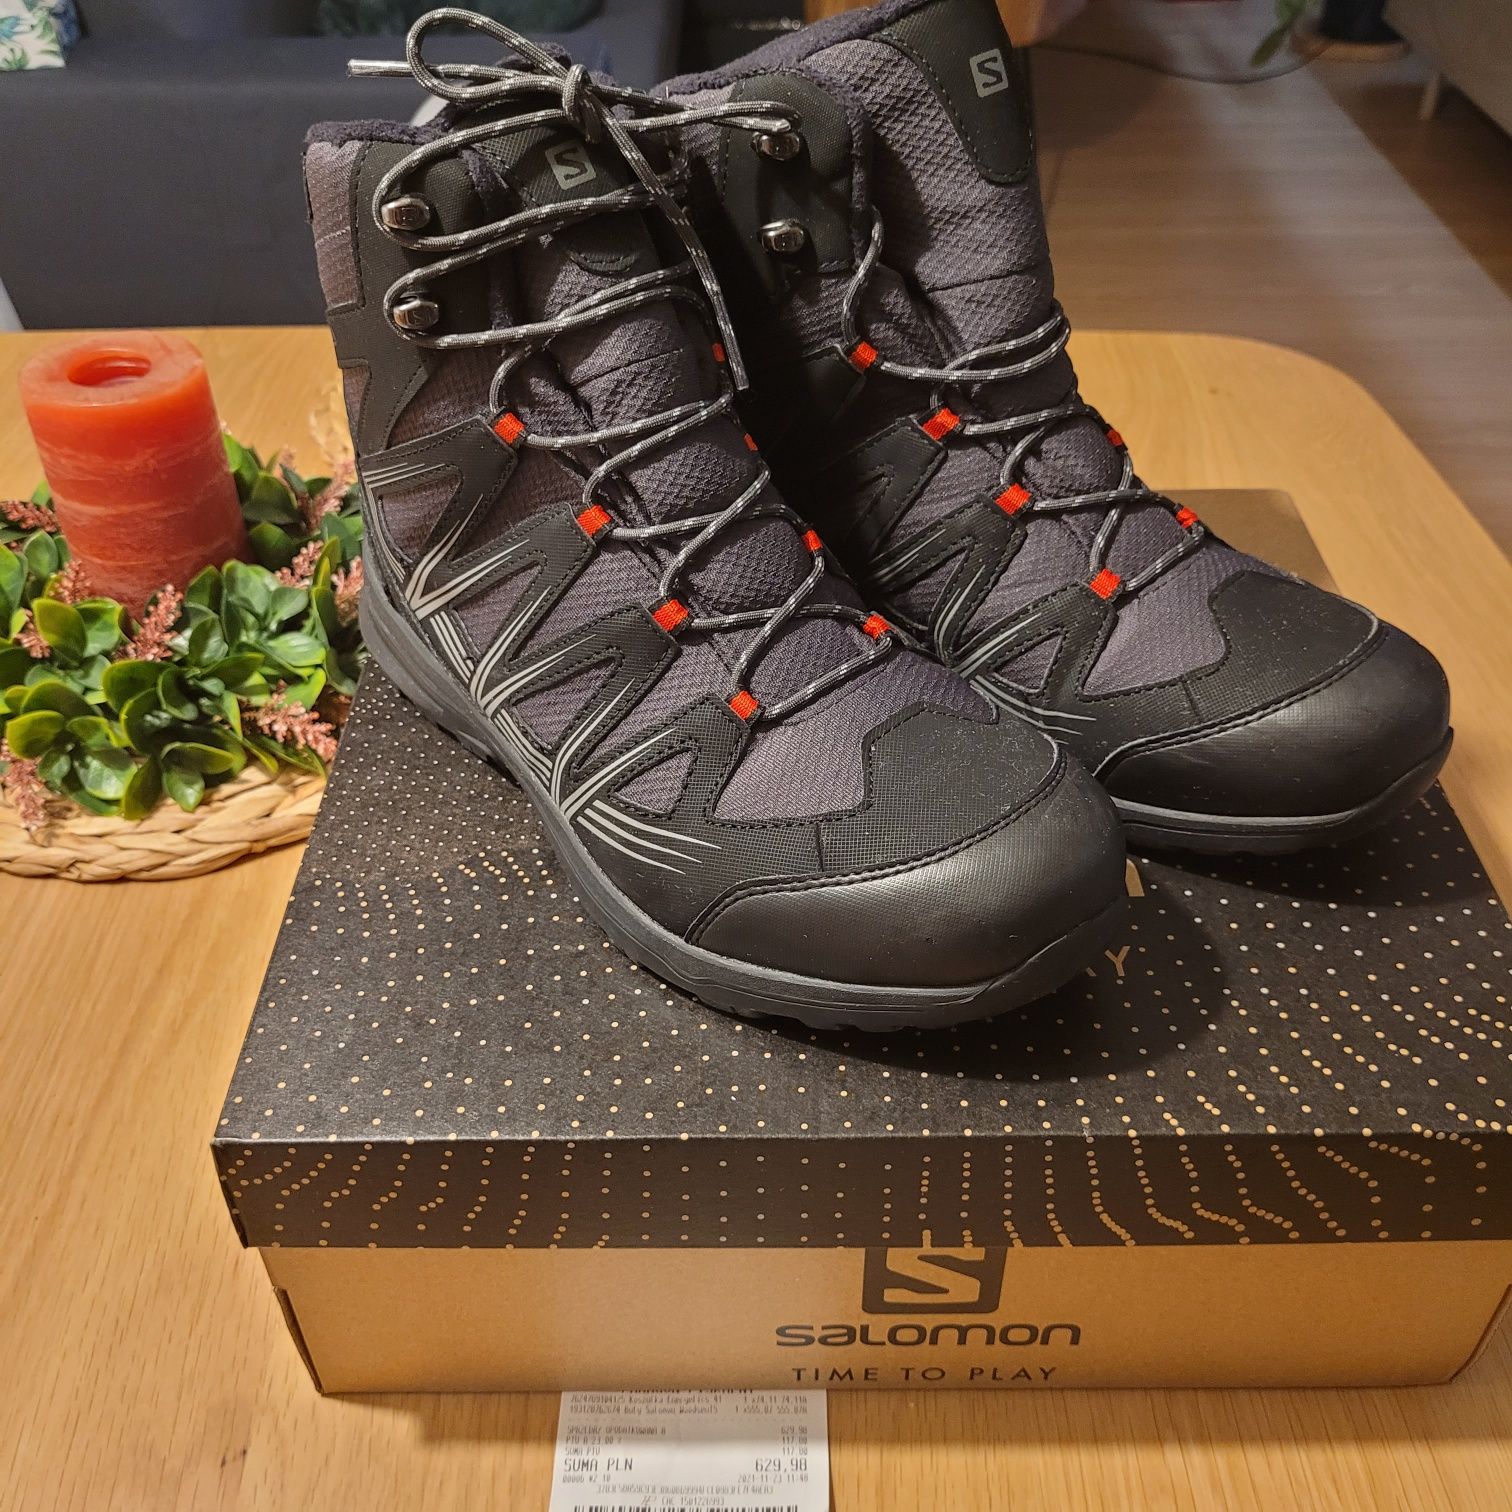 Salomon Woodsen NOWE WP 415856 męskie zimowe buty trekkingowe turystyc